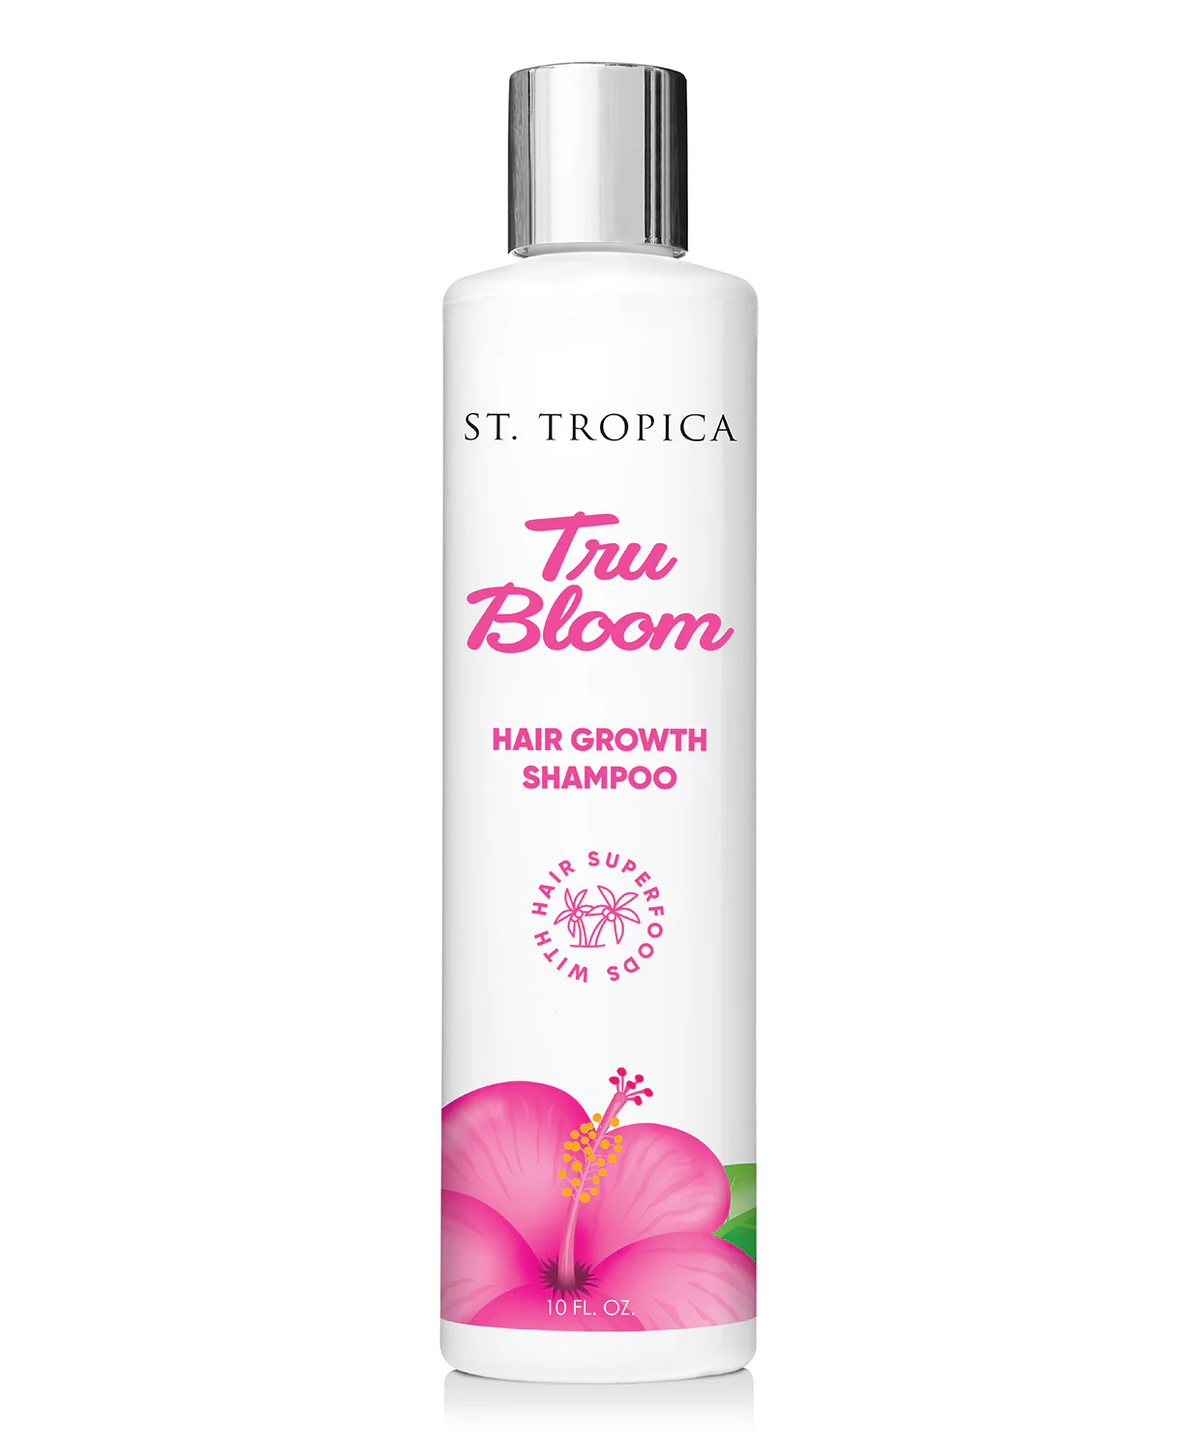 ST. TROPICA Tru Bloom Weekly Ritual Hair Growth Set